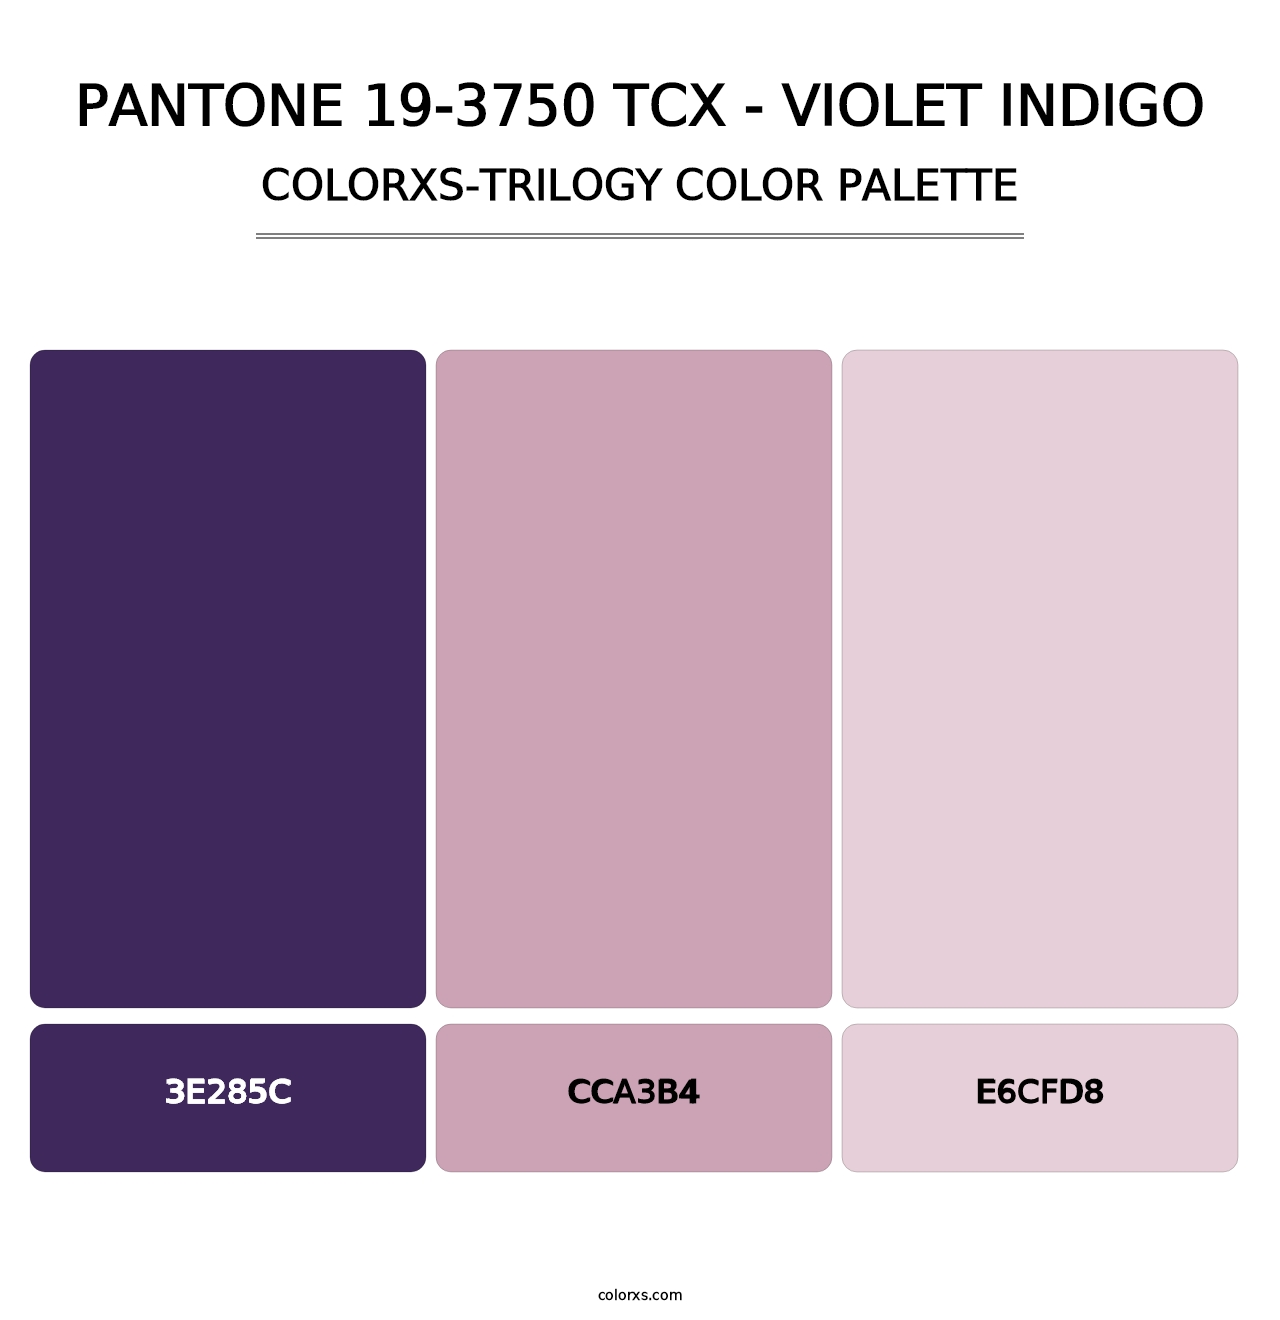 PANTONE 19-3750 TCX - Violet Indigo - Colorxs Trilogy Palette